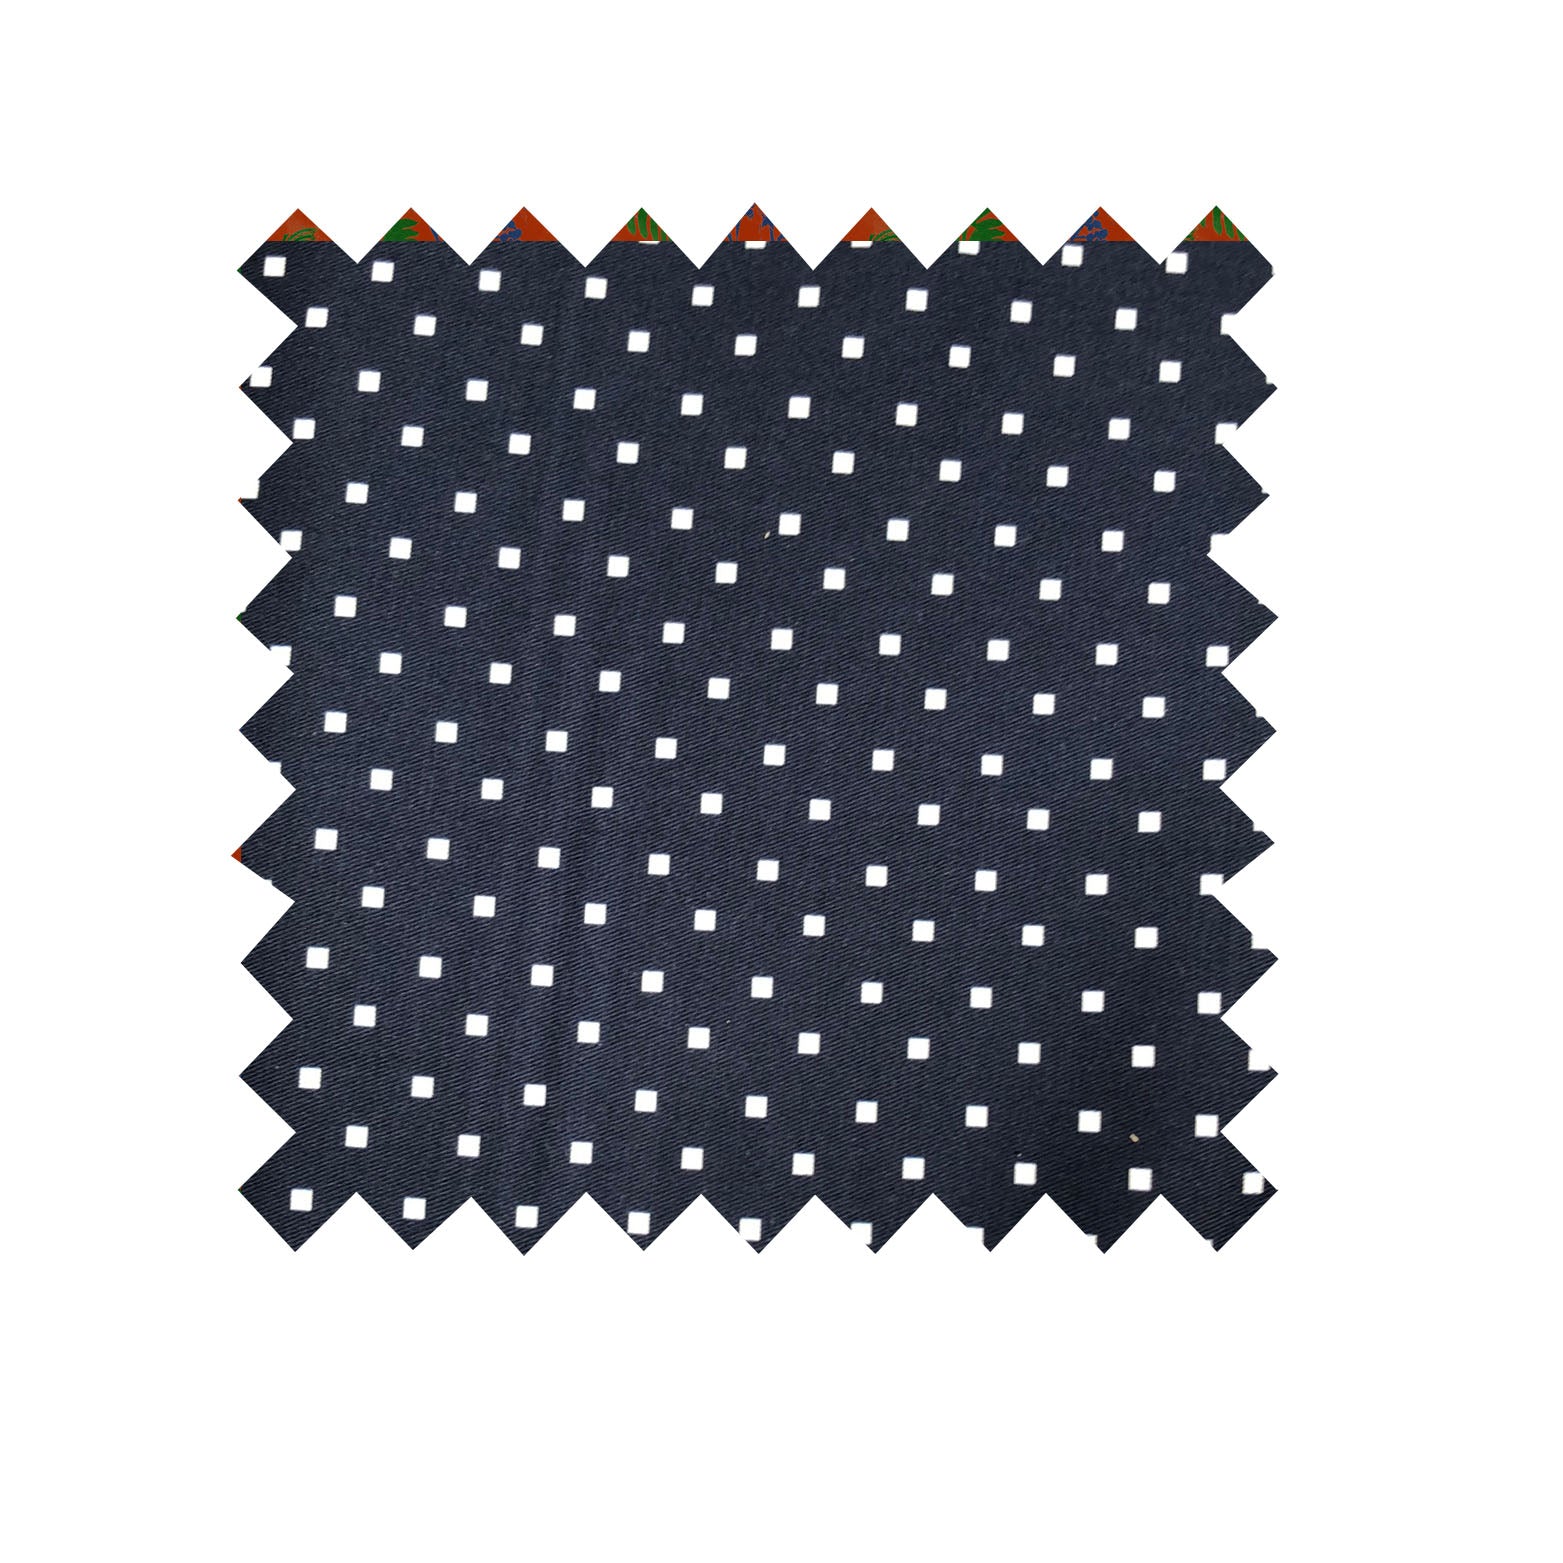 Navy Square Spot Fabric - Organic Cotton Twill